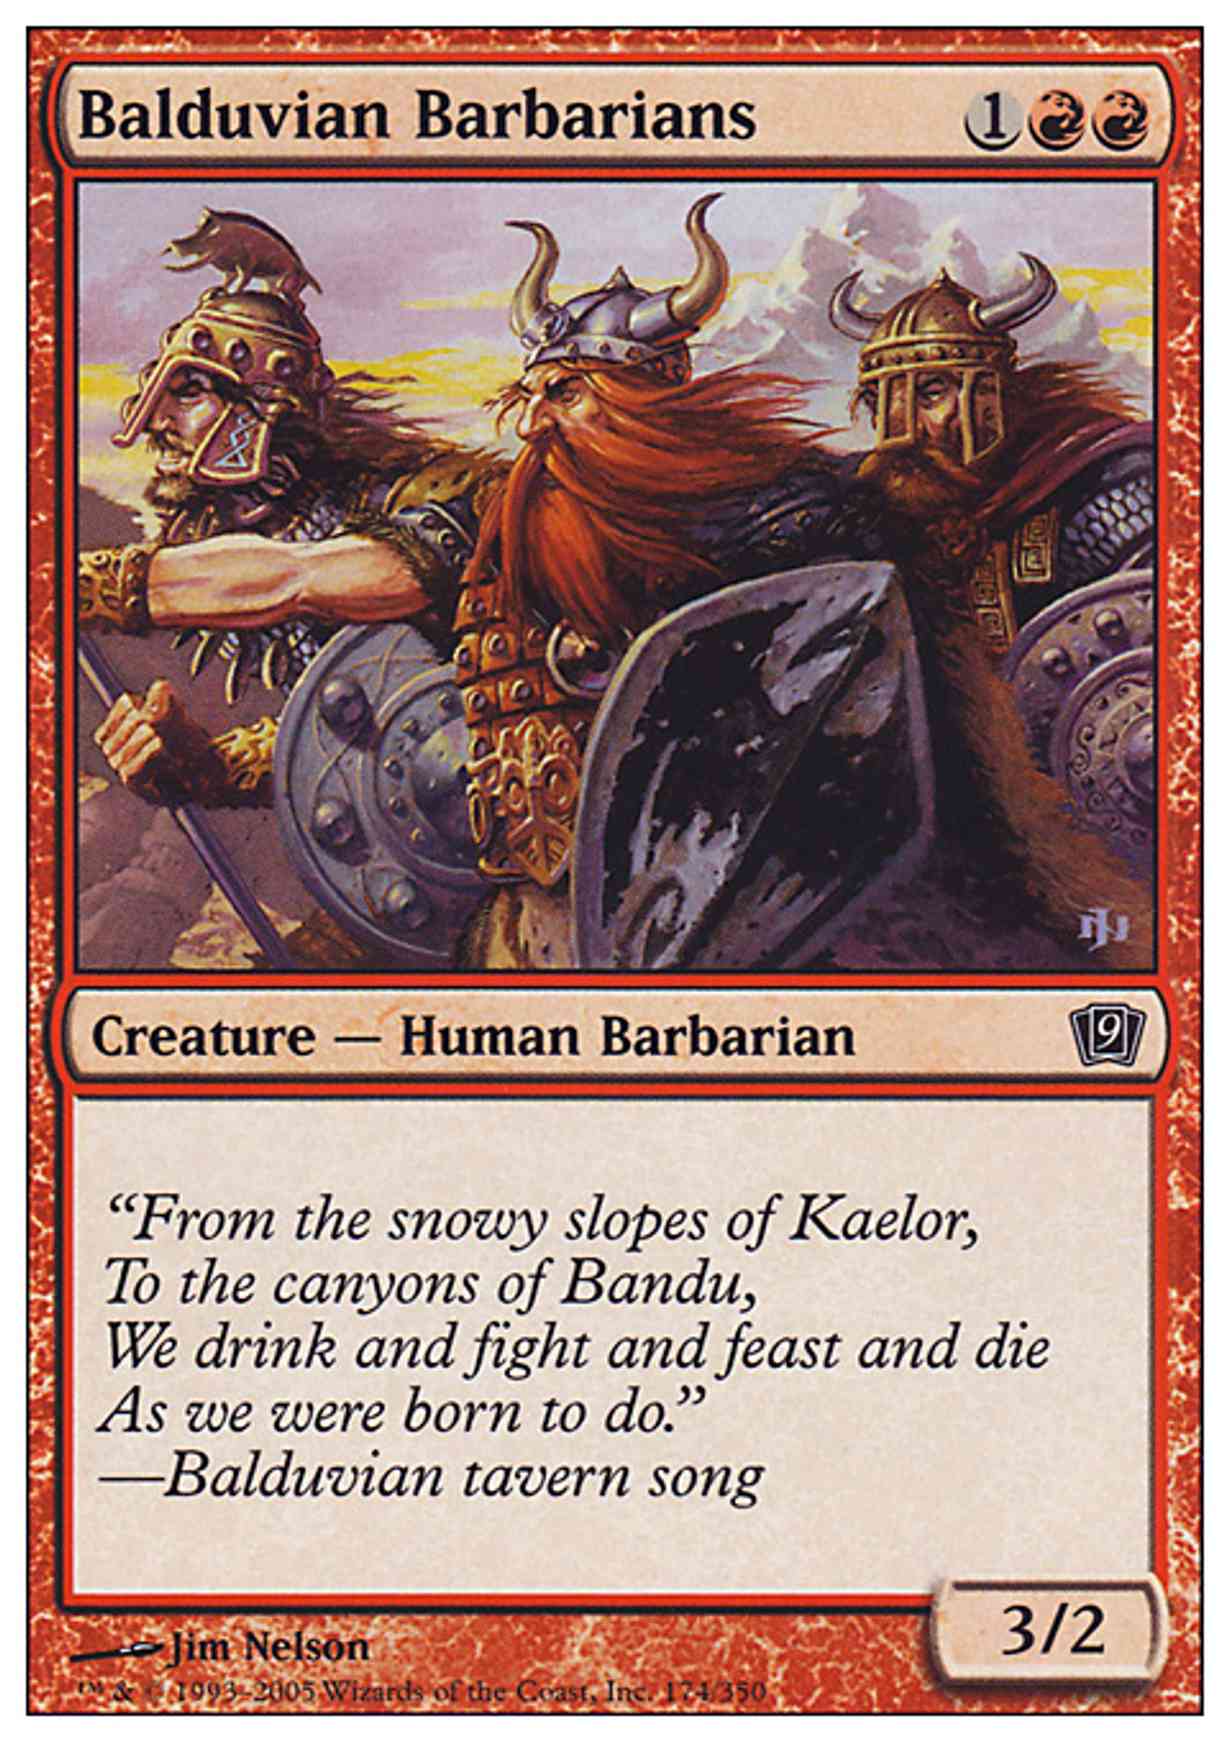 Balduvian Barbarians magic card front